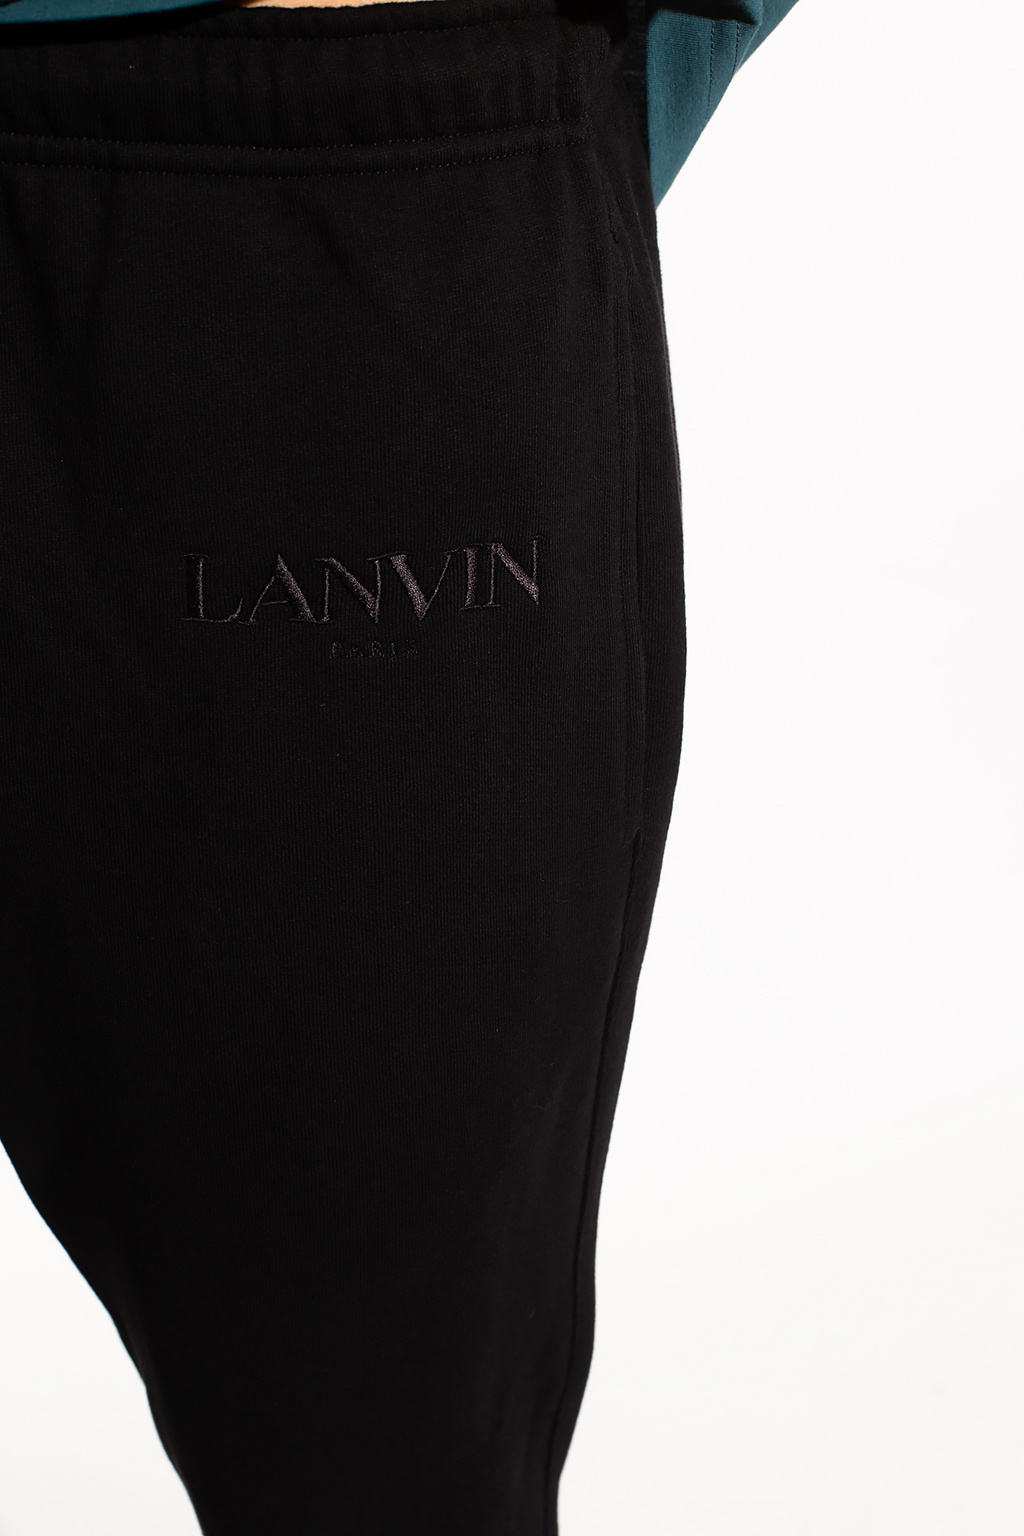 Lanvin Jeans Blu 3ed524-m0n